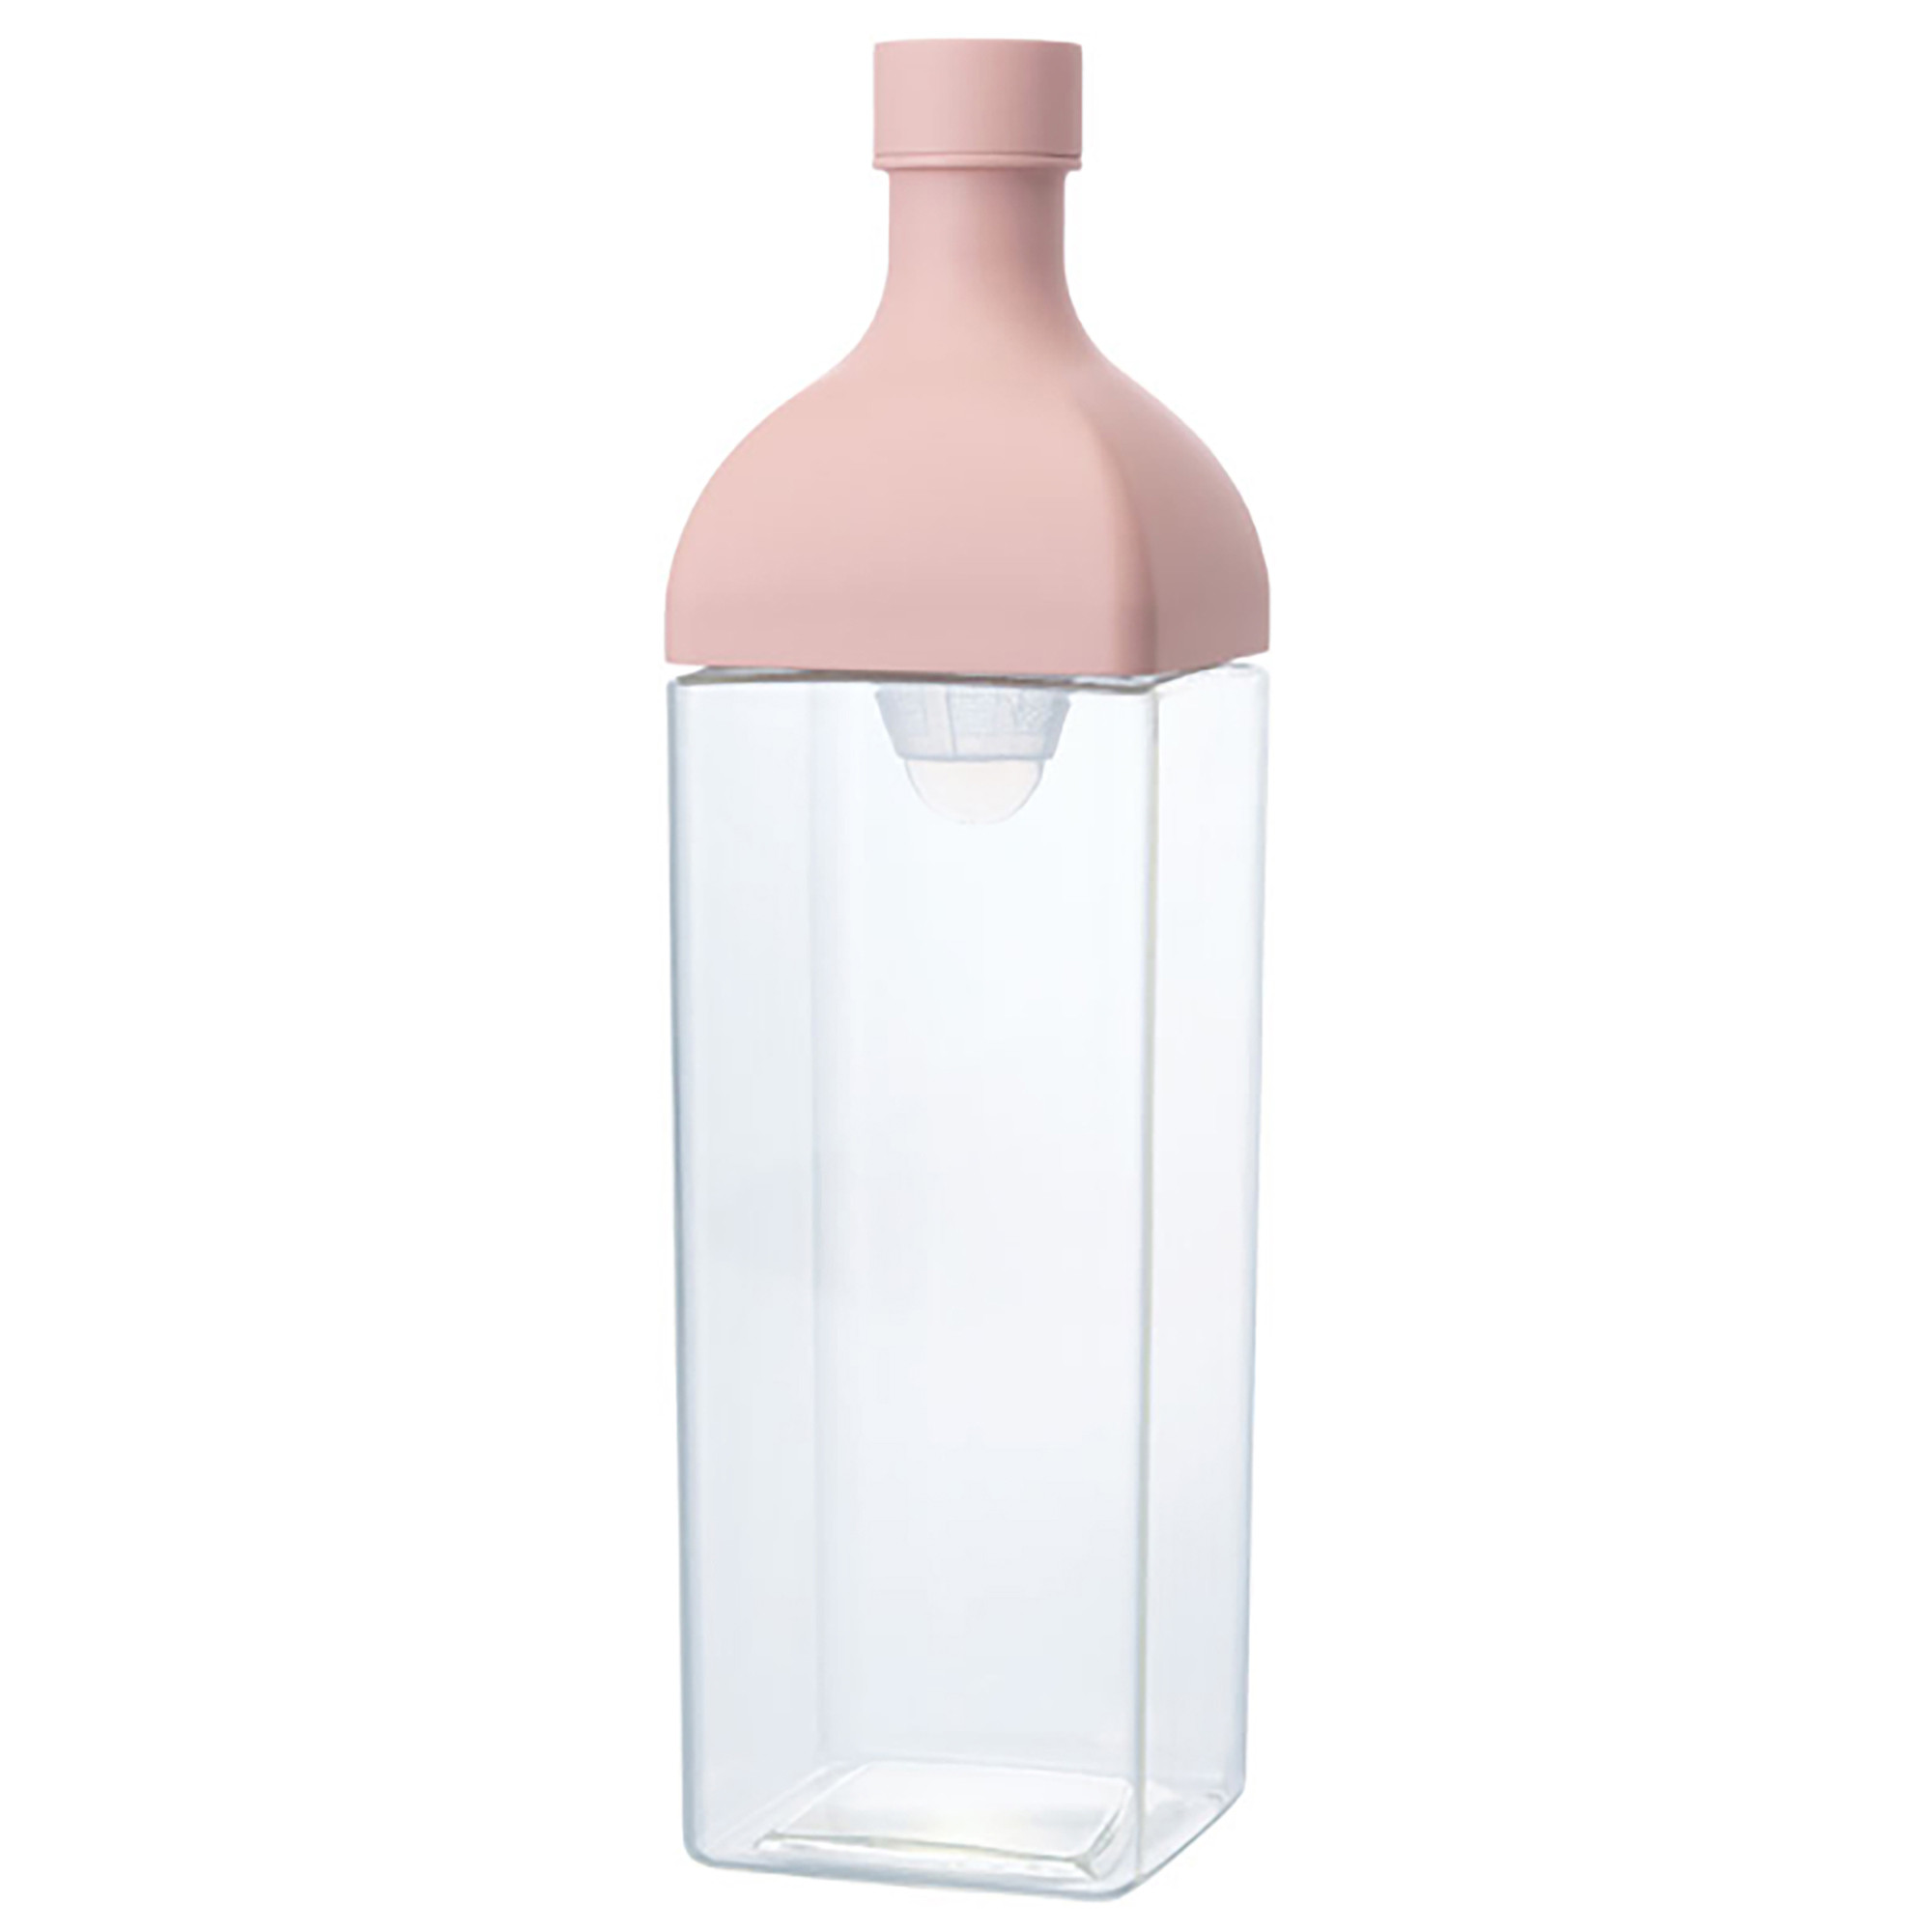 Ka-Ku Icetea koldbrygger, pink - 1,2 liter